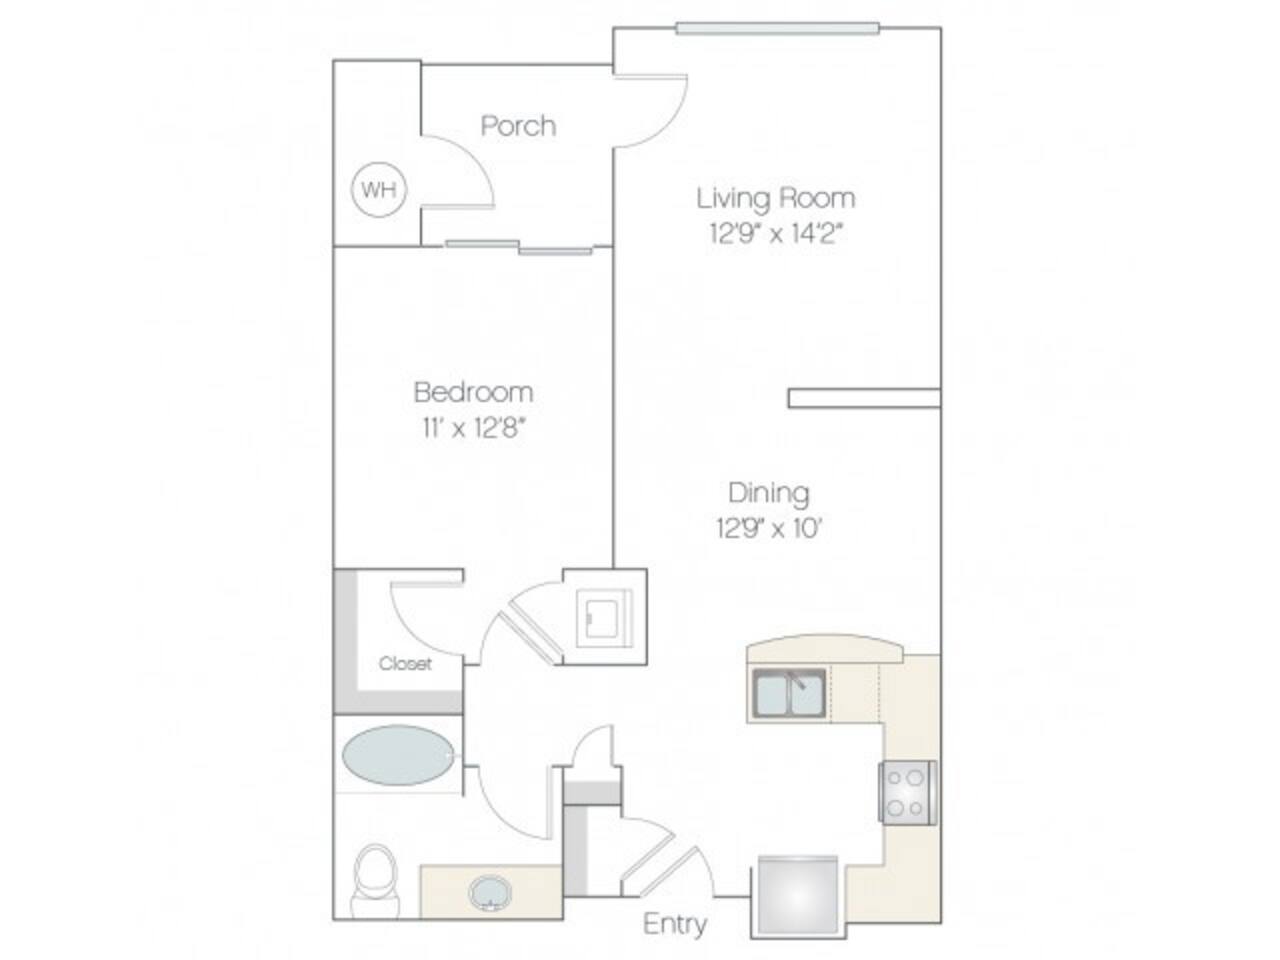 Floorplan diagram for A1.R, showing 1 bedroom